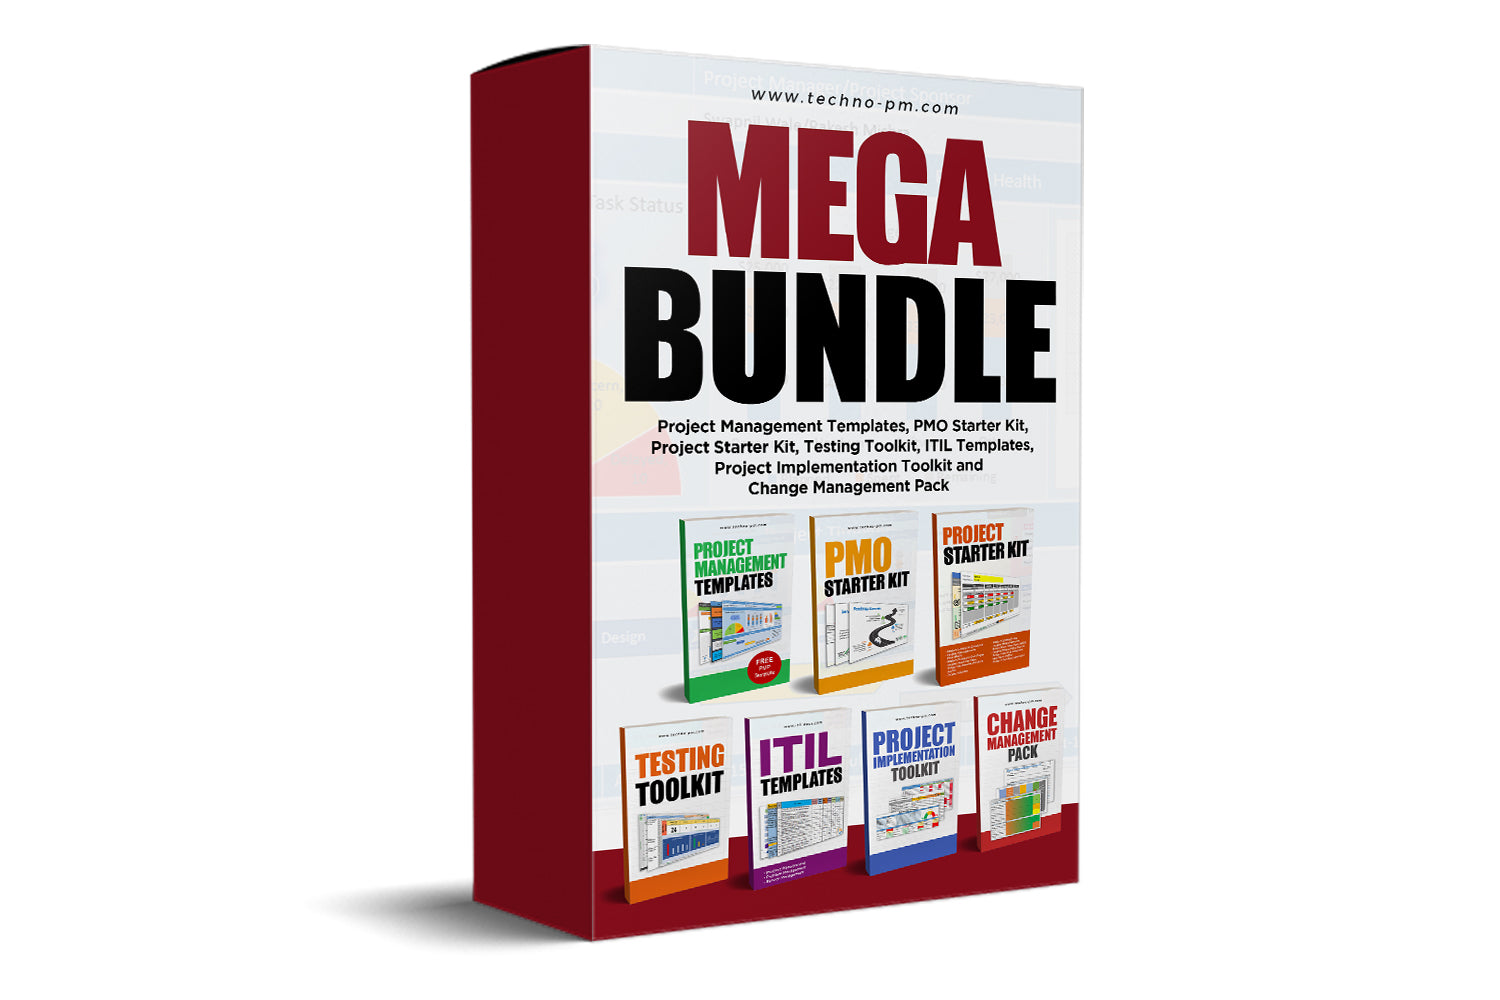 Mega bundle